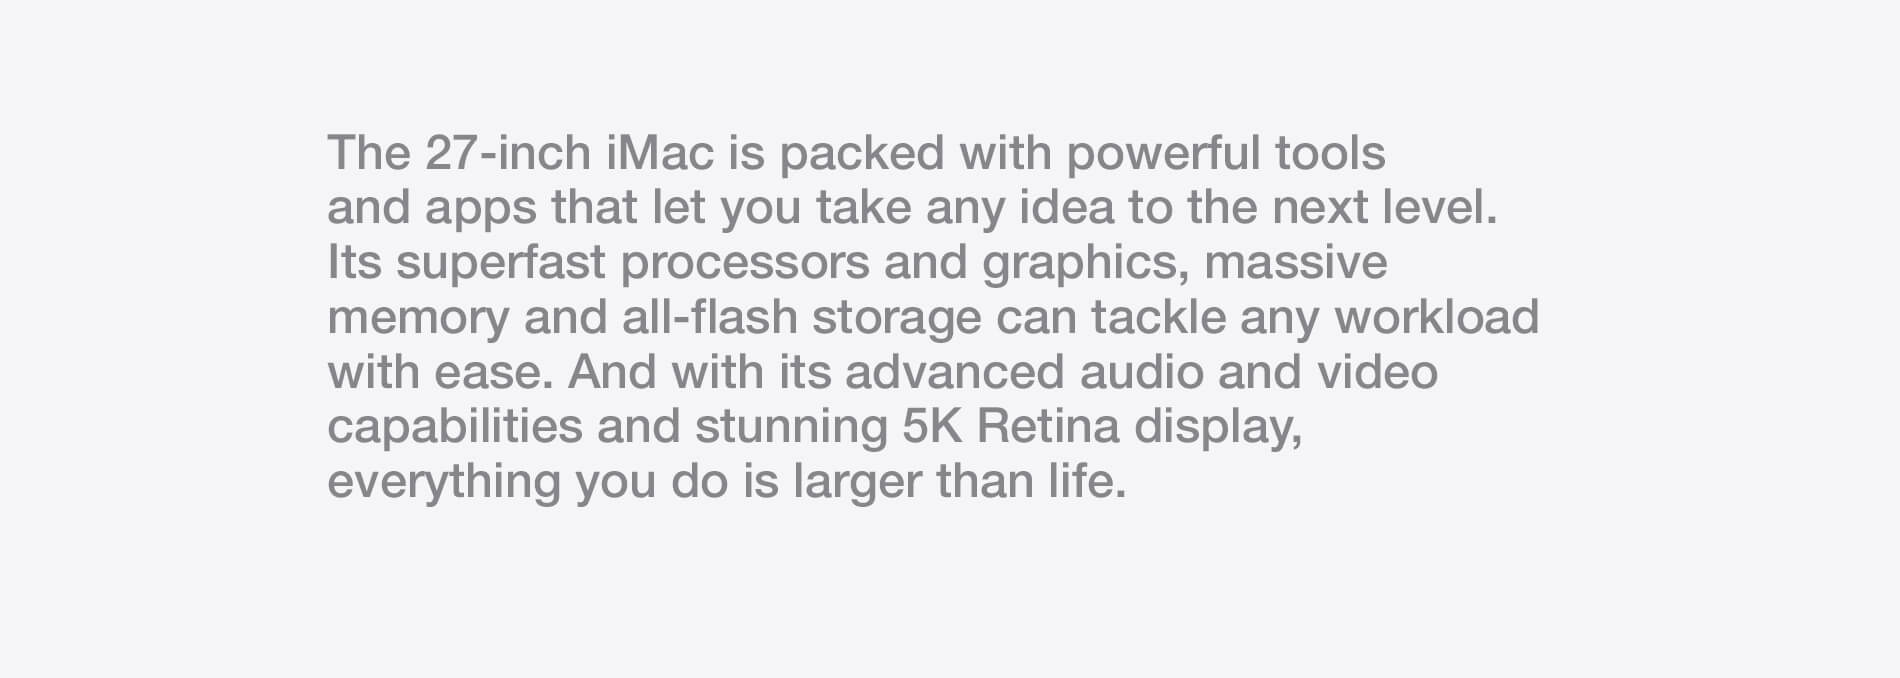 iMac. Ready for big things